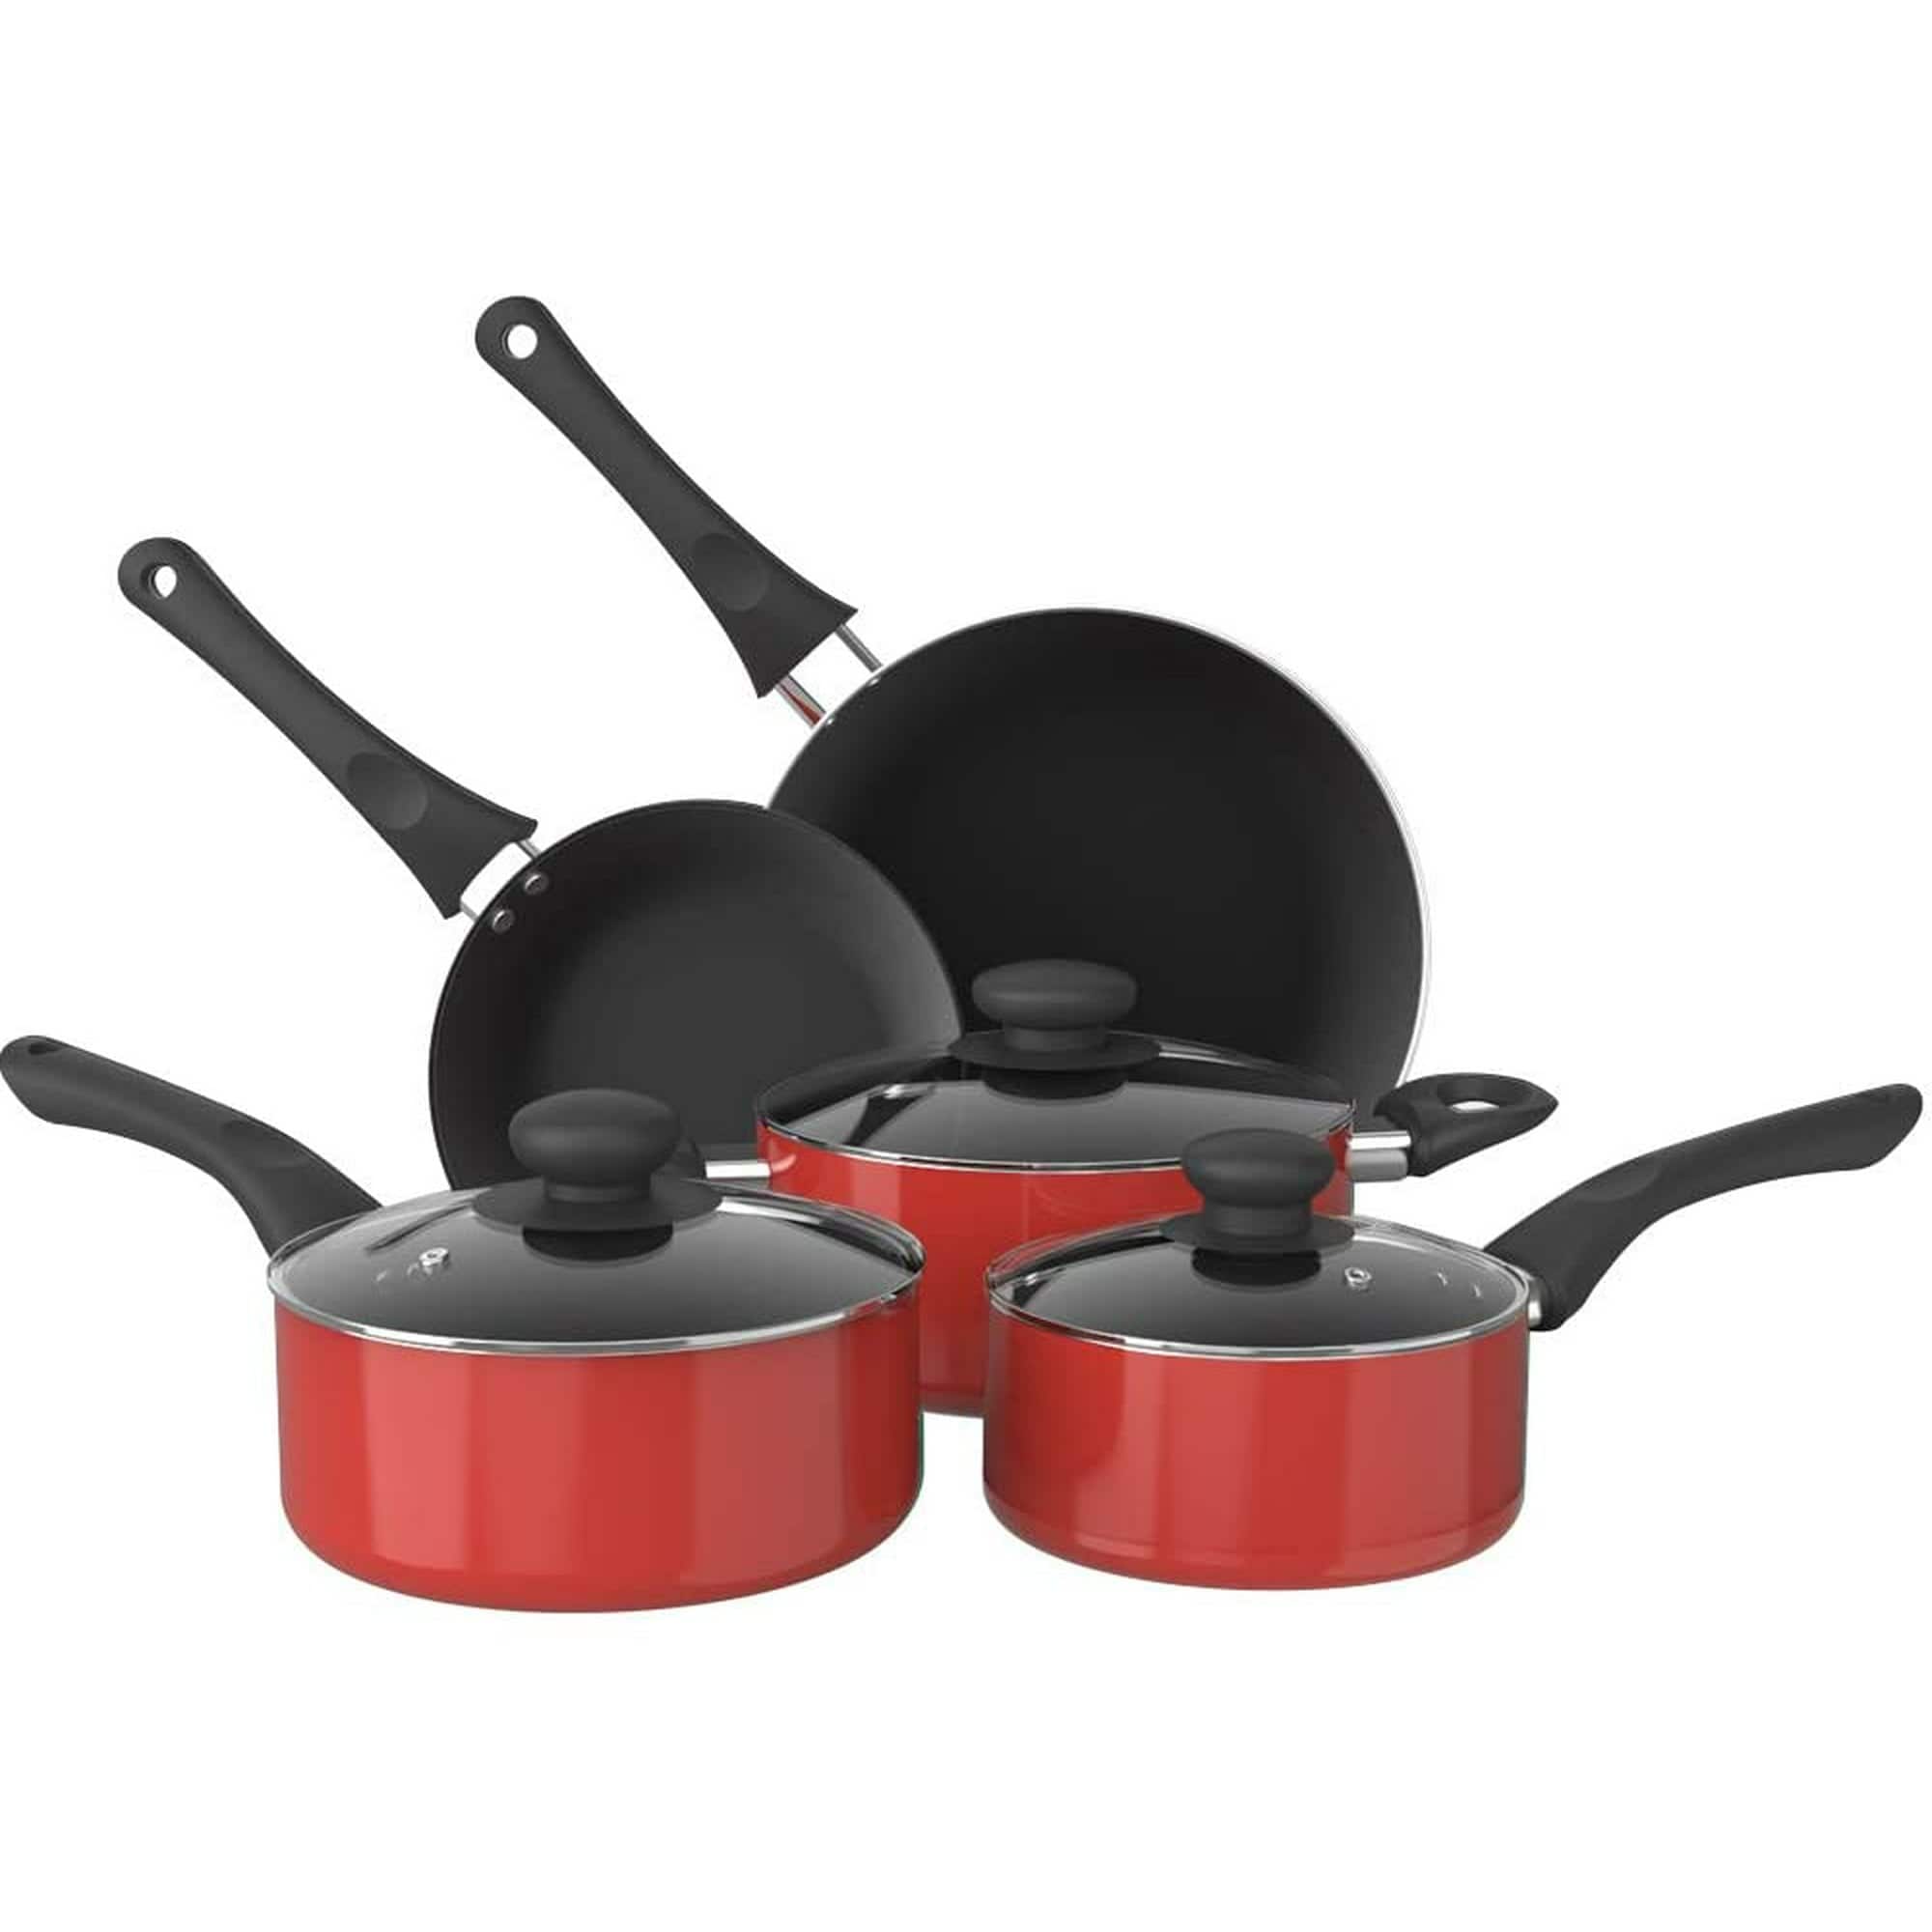 https://ak1.ostkcdn.com/images/products/is/images/direct/7015d2a951e36aff99964deffa7b87cfd6604e4f/Aluminum-Alloy-Non-Stick-Cookware-Set%2C-Pots-and-Pans---8-Piece-Set.jpg